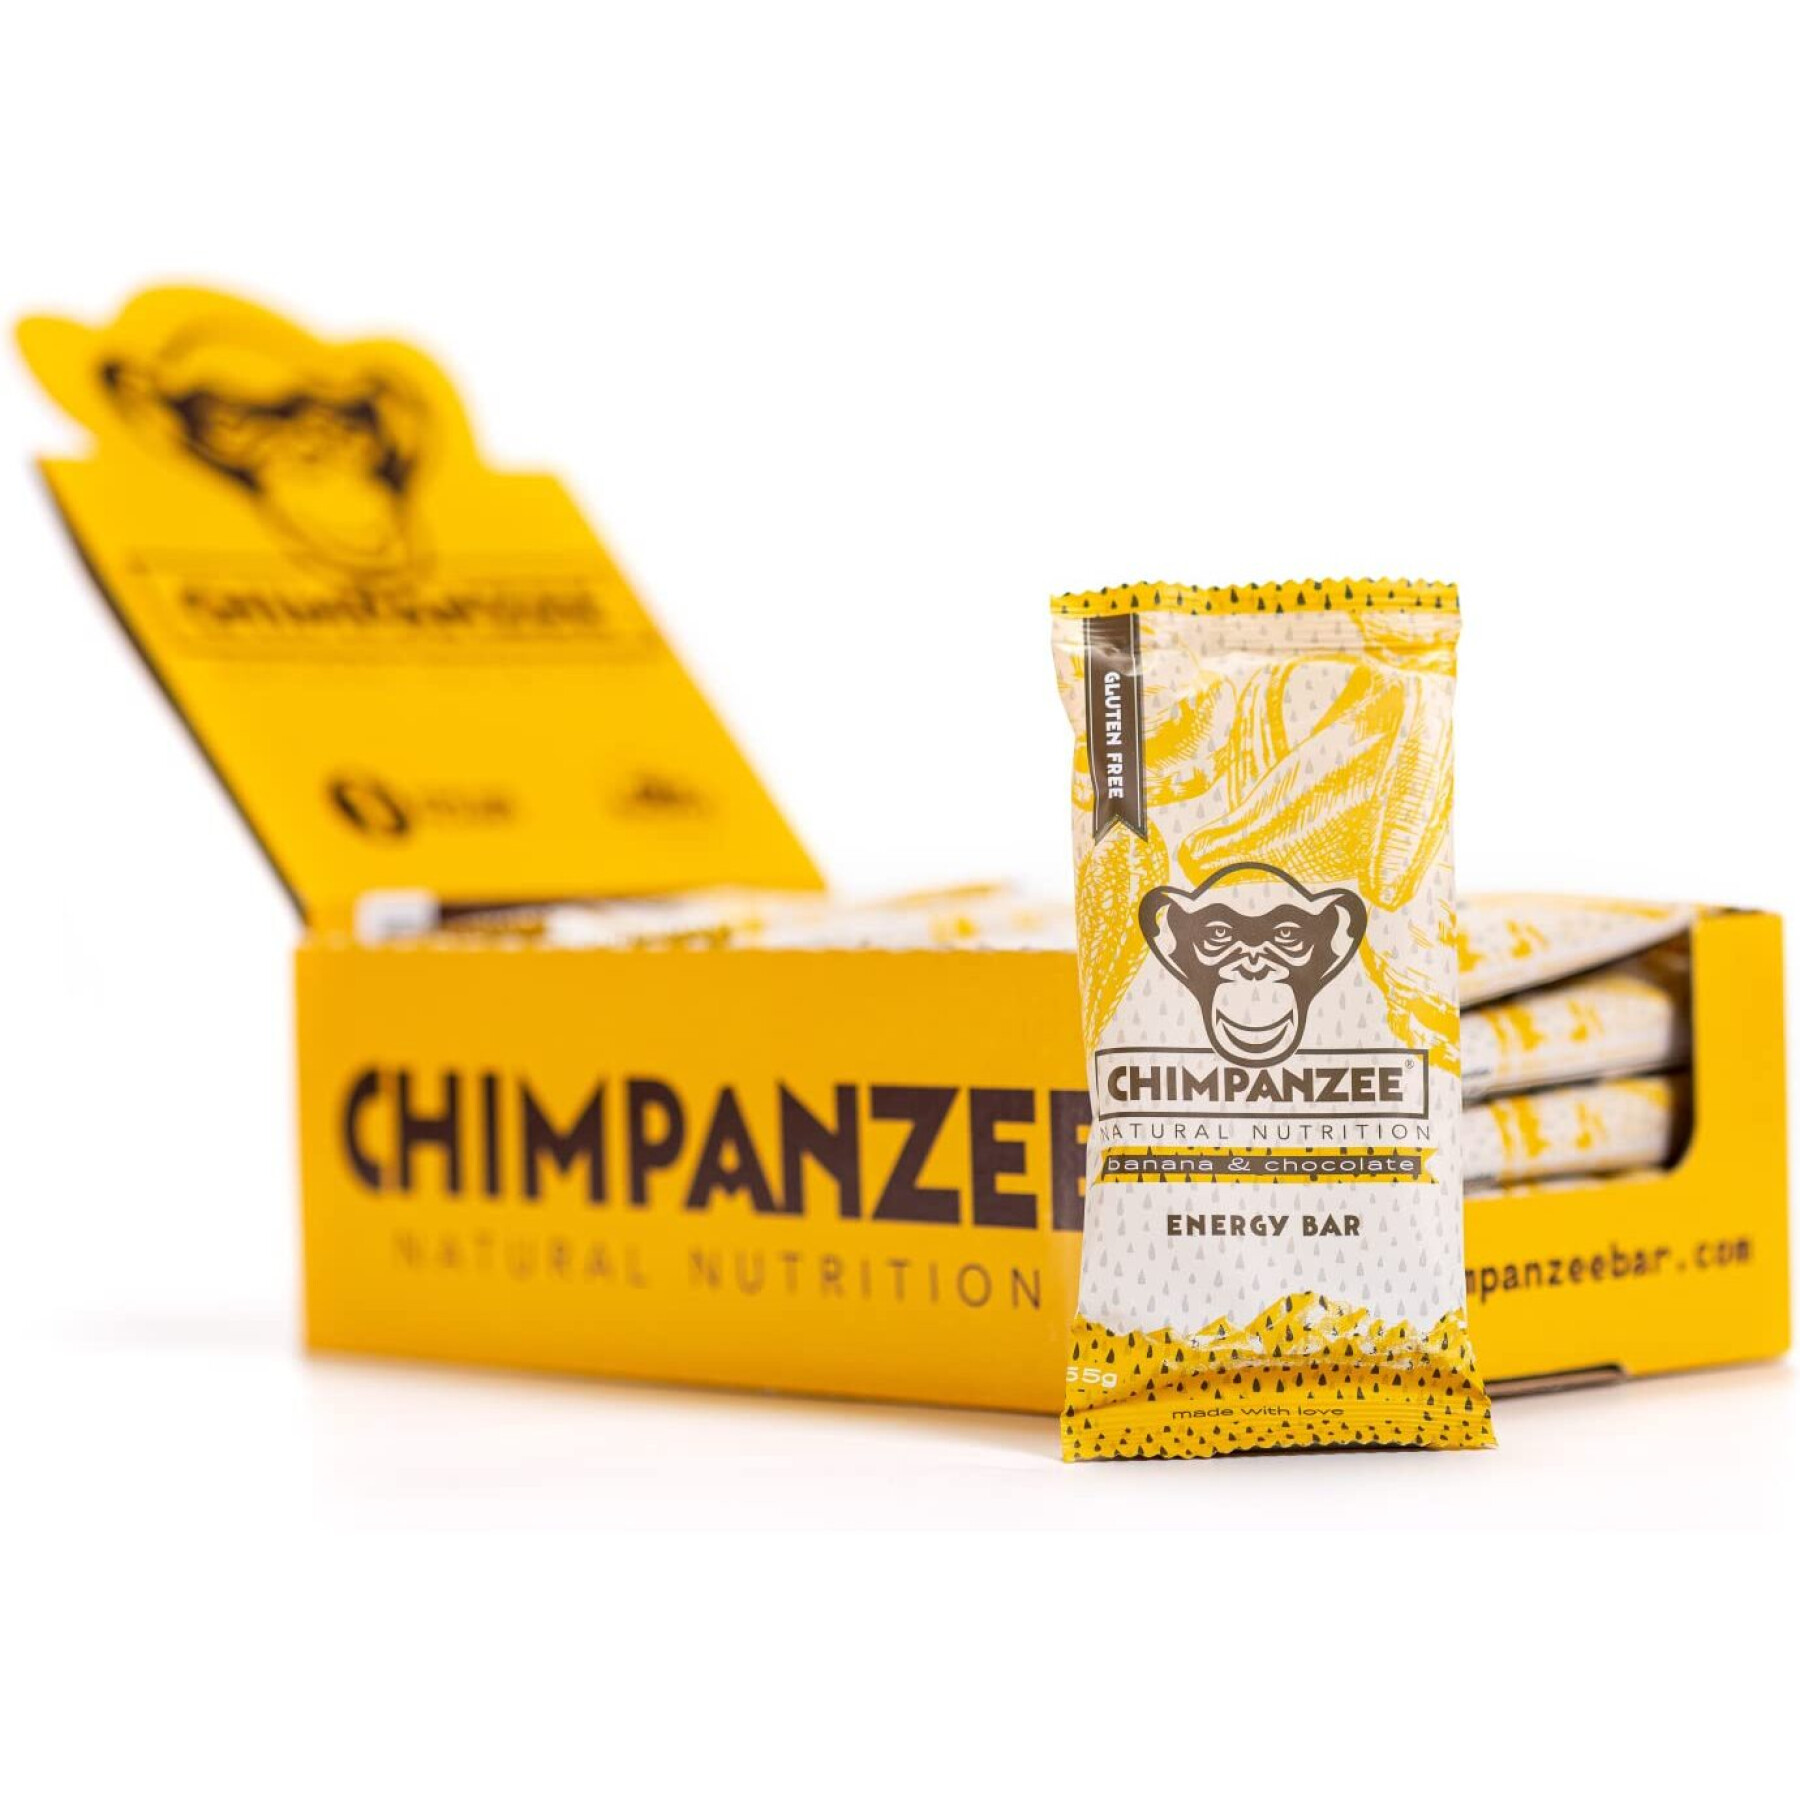 Barre énergétique Chimpanzee vegan (x20) : banane/chocolat 55g 